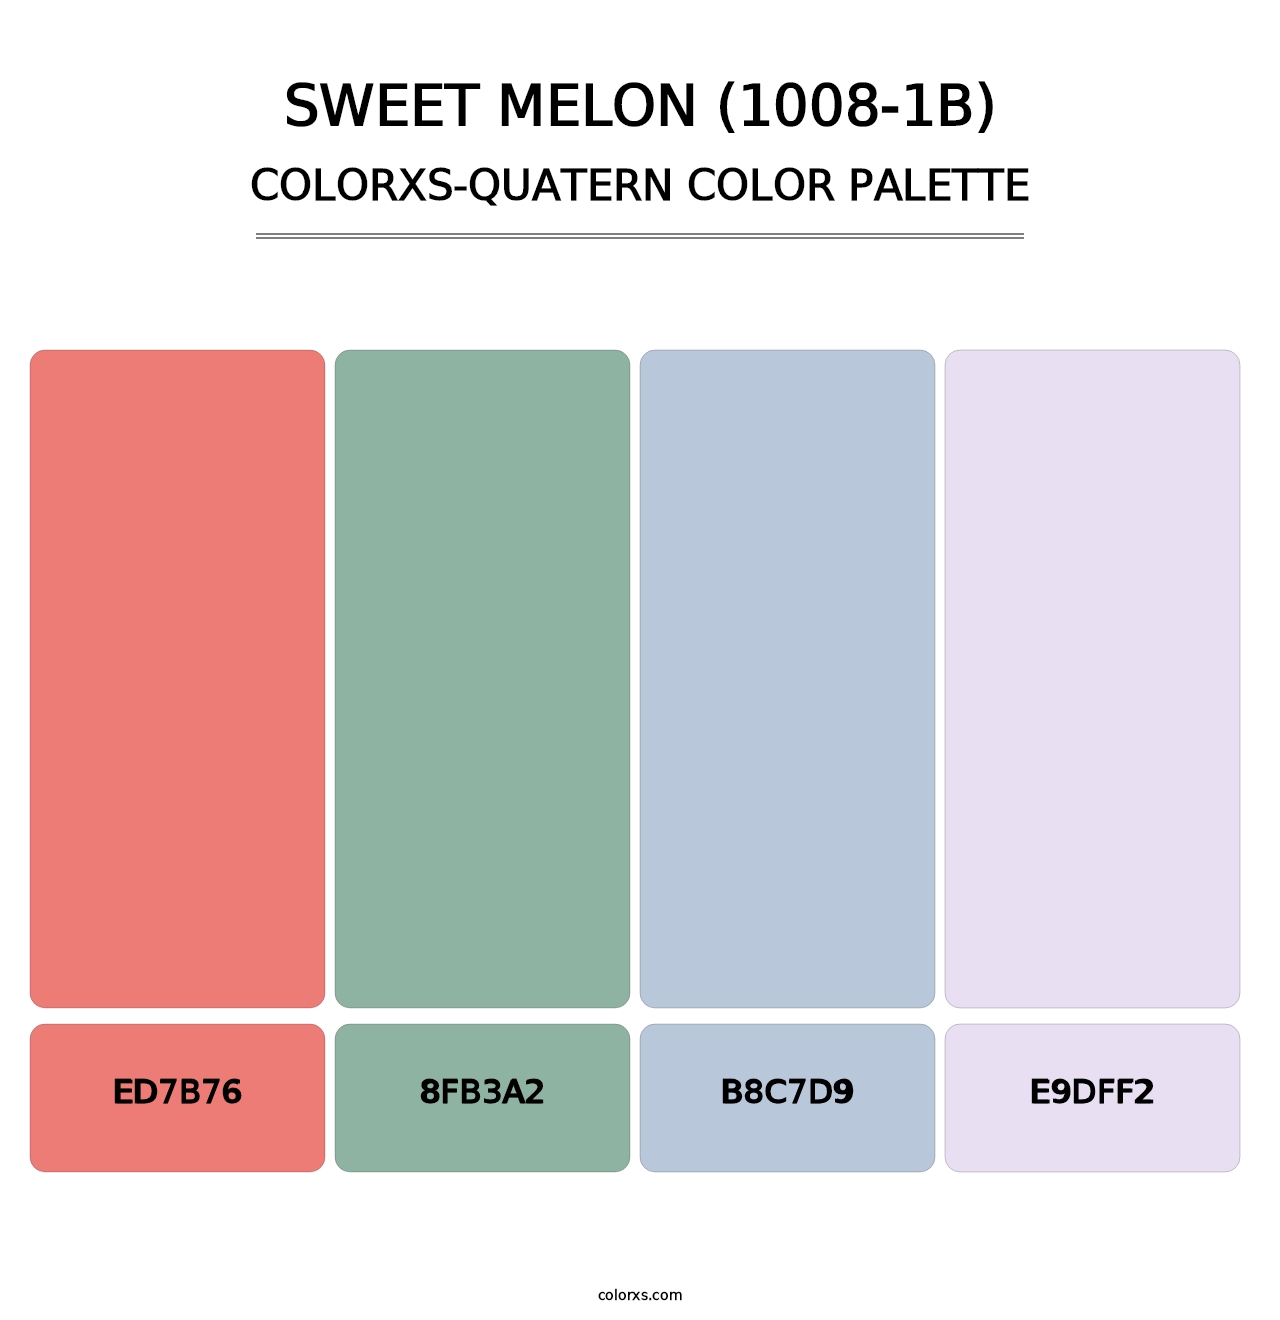 Sweet Melon (1008-1B) - Colorxs Quatern Palette